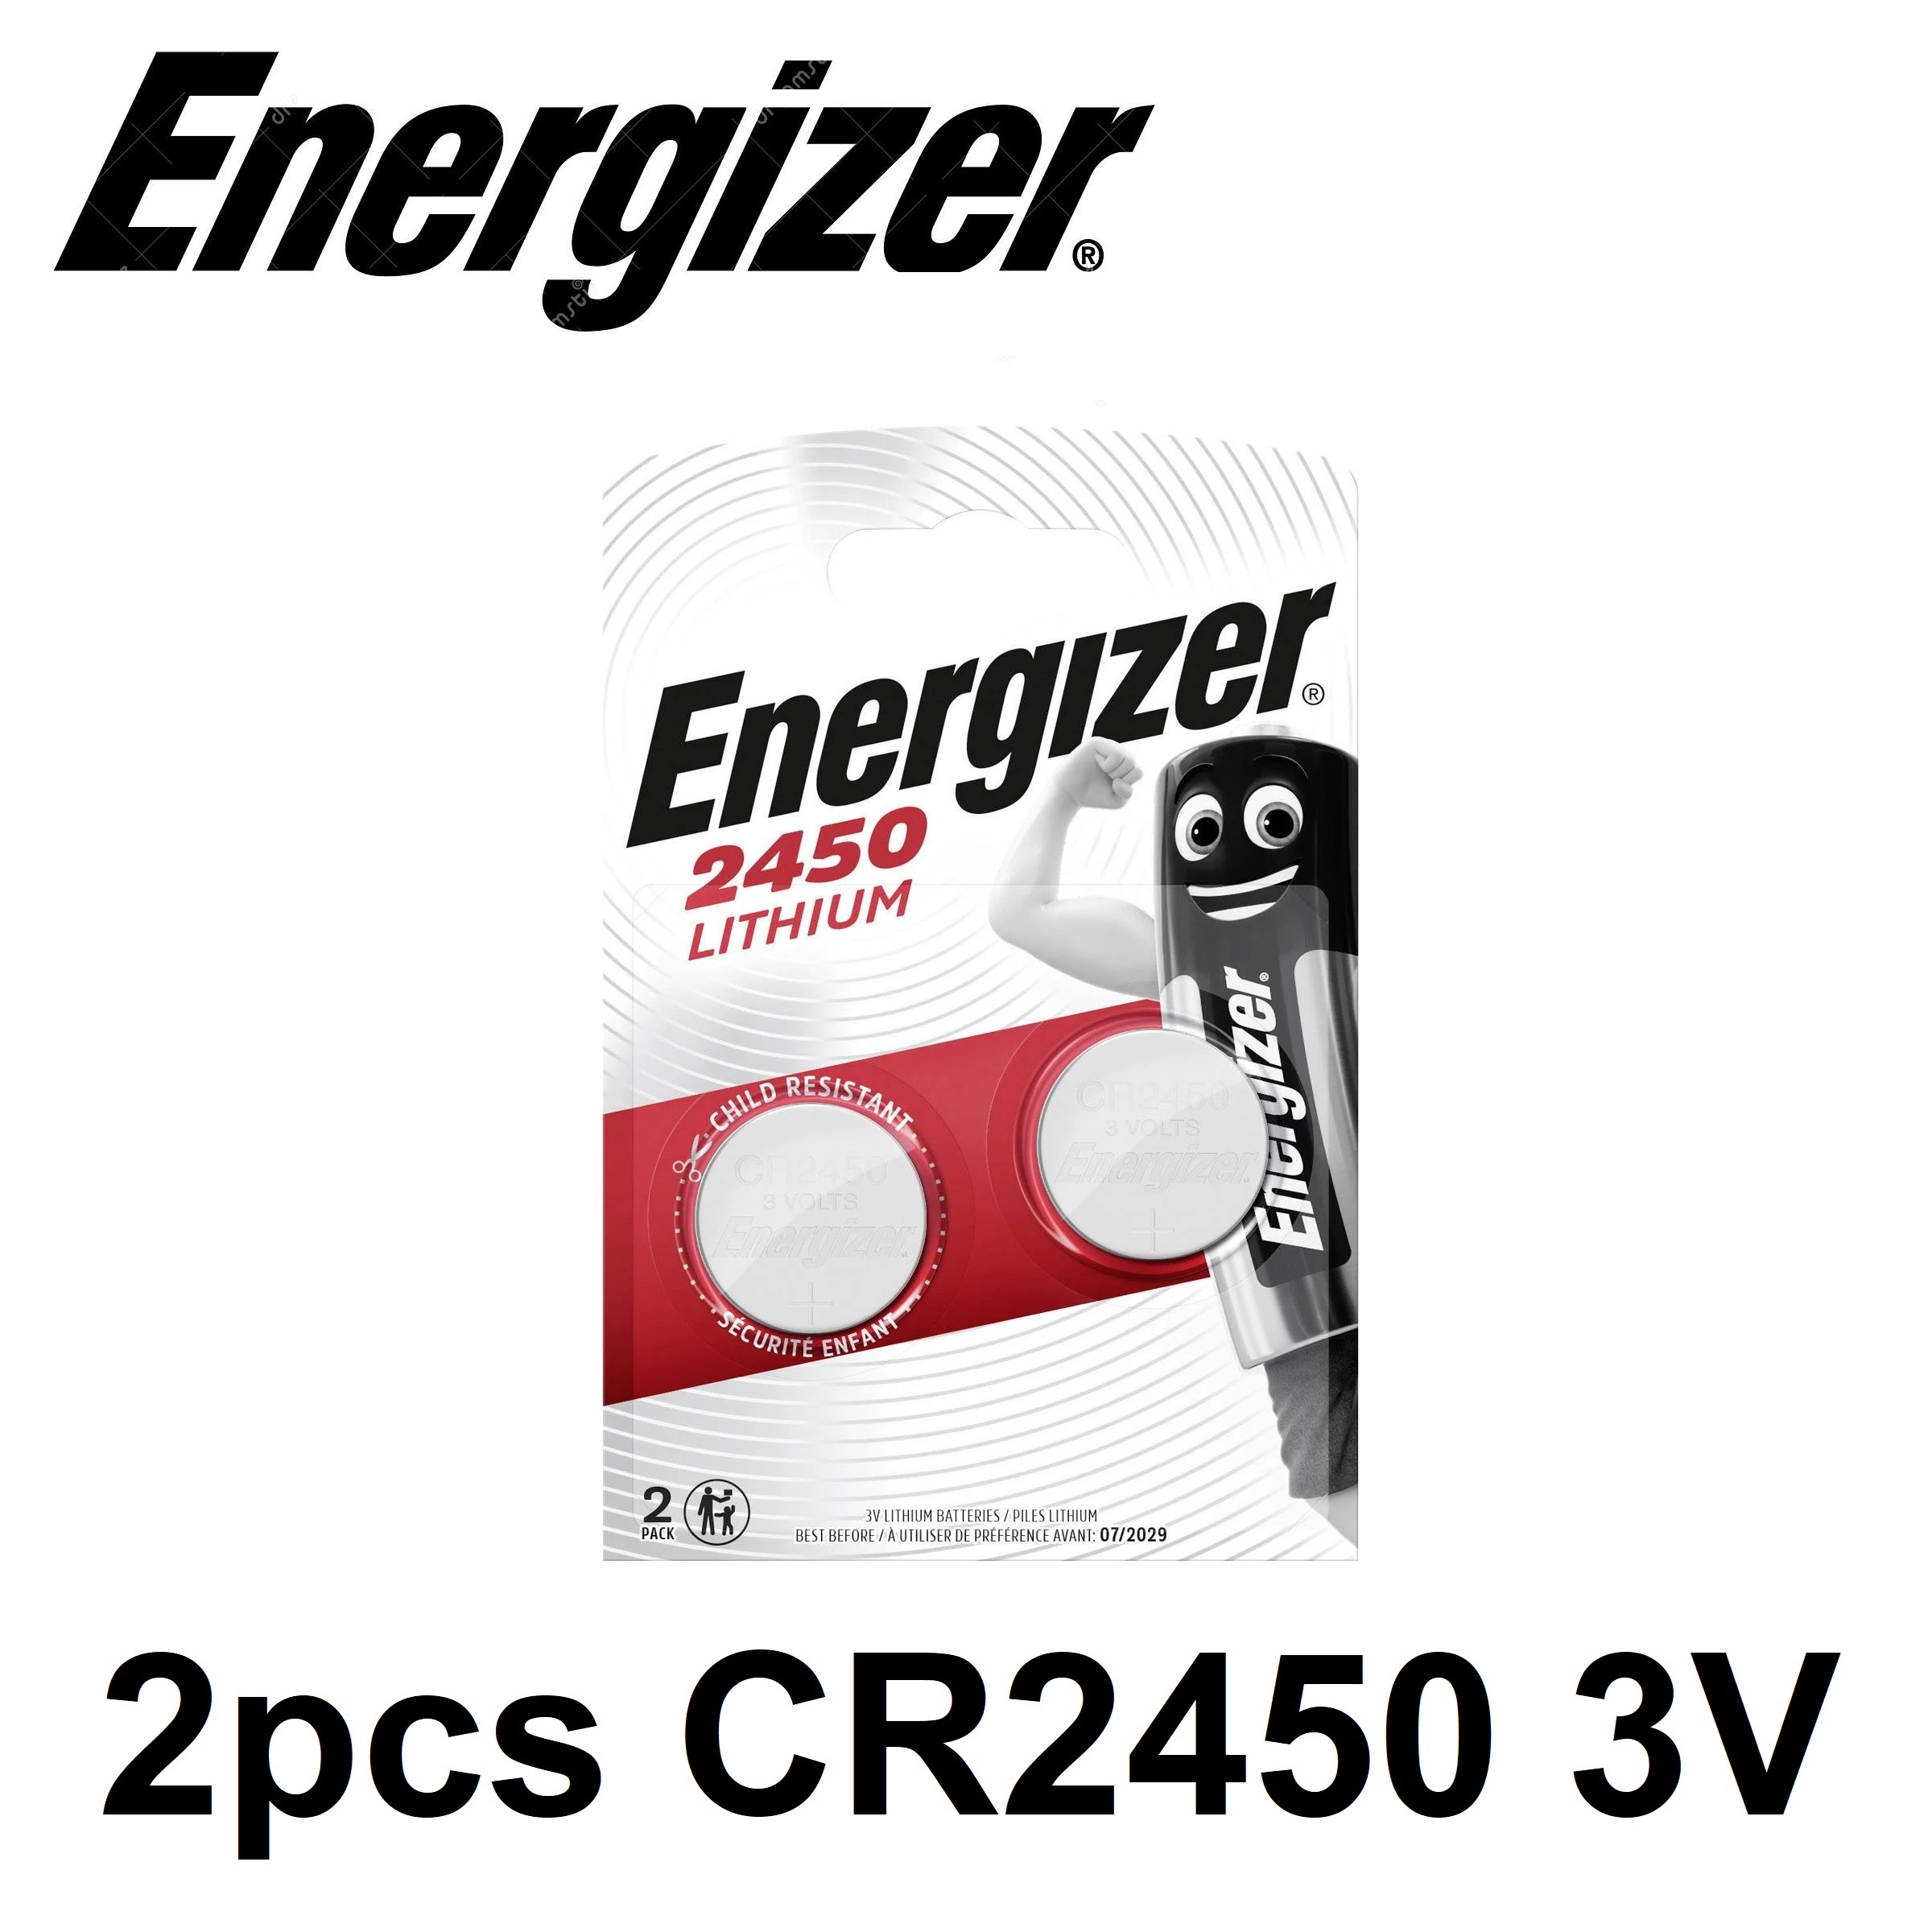 Energizer 2450 CR2450 (2pcs) 3v Lithium Button Cell Battery in Blister Pack  K2450L CR2450N DL2450